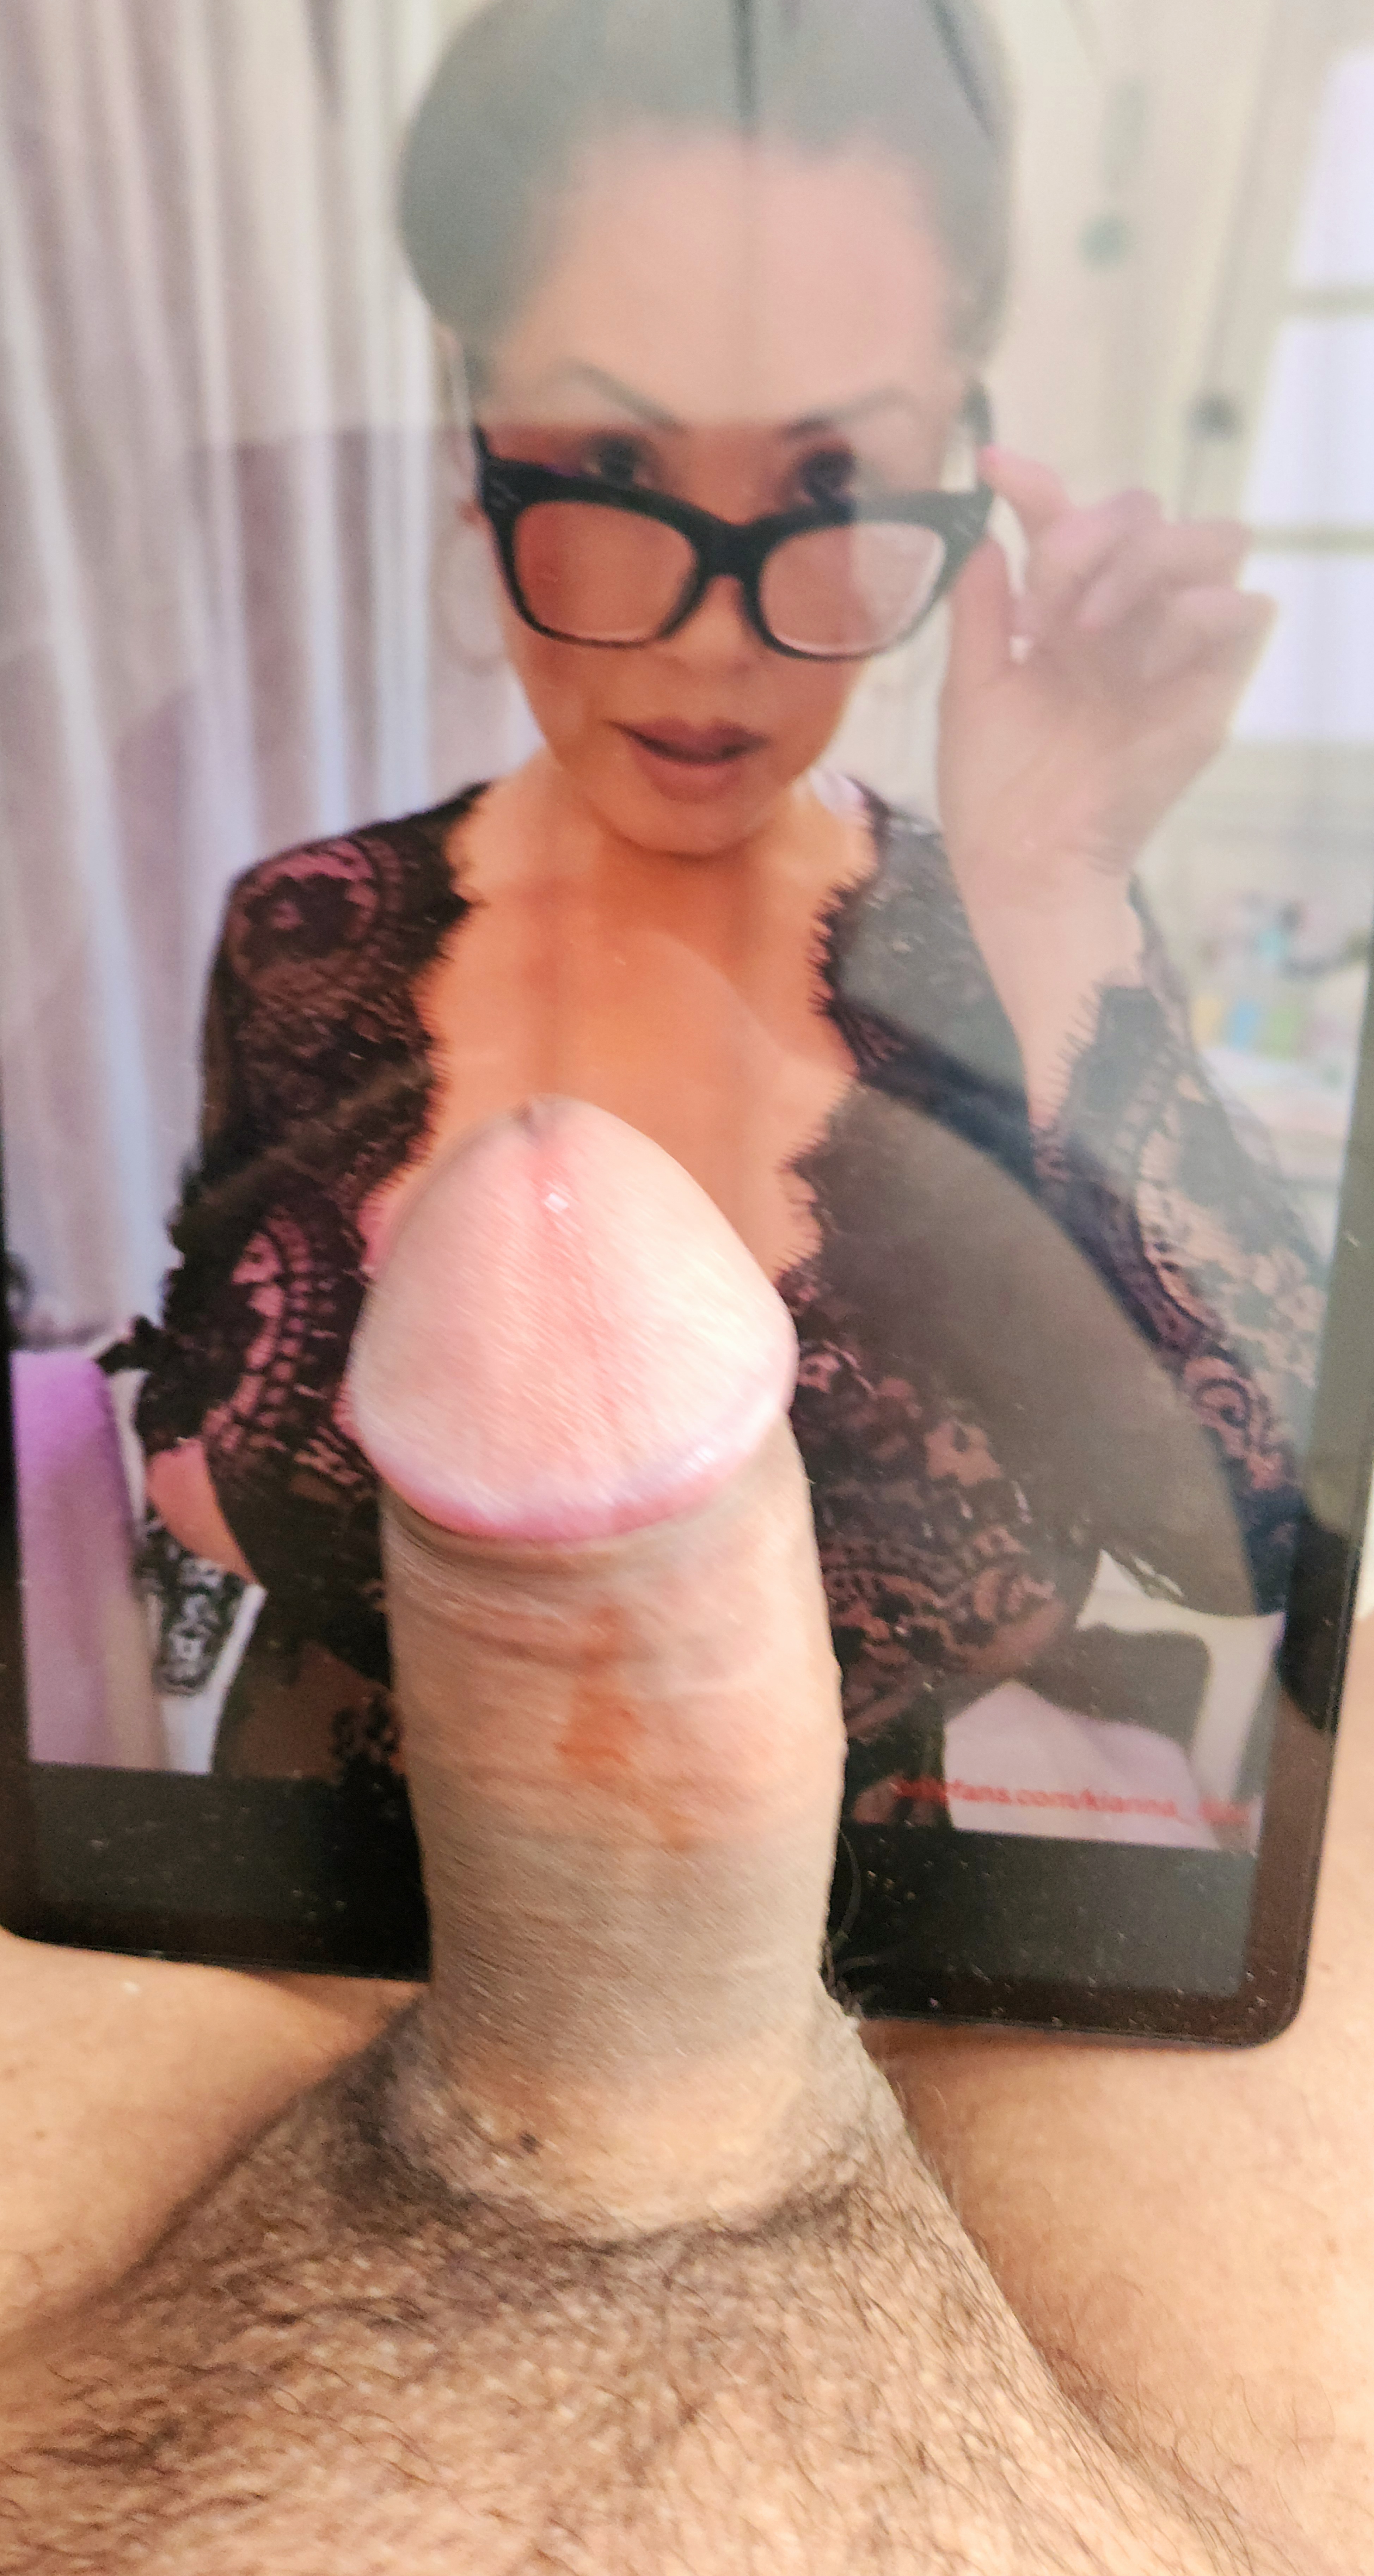 Cock tribute to curvy milf pornstar by Thukkamj